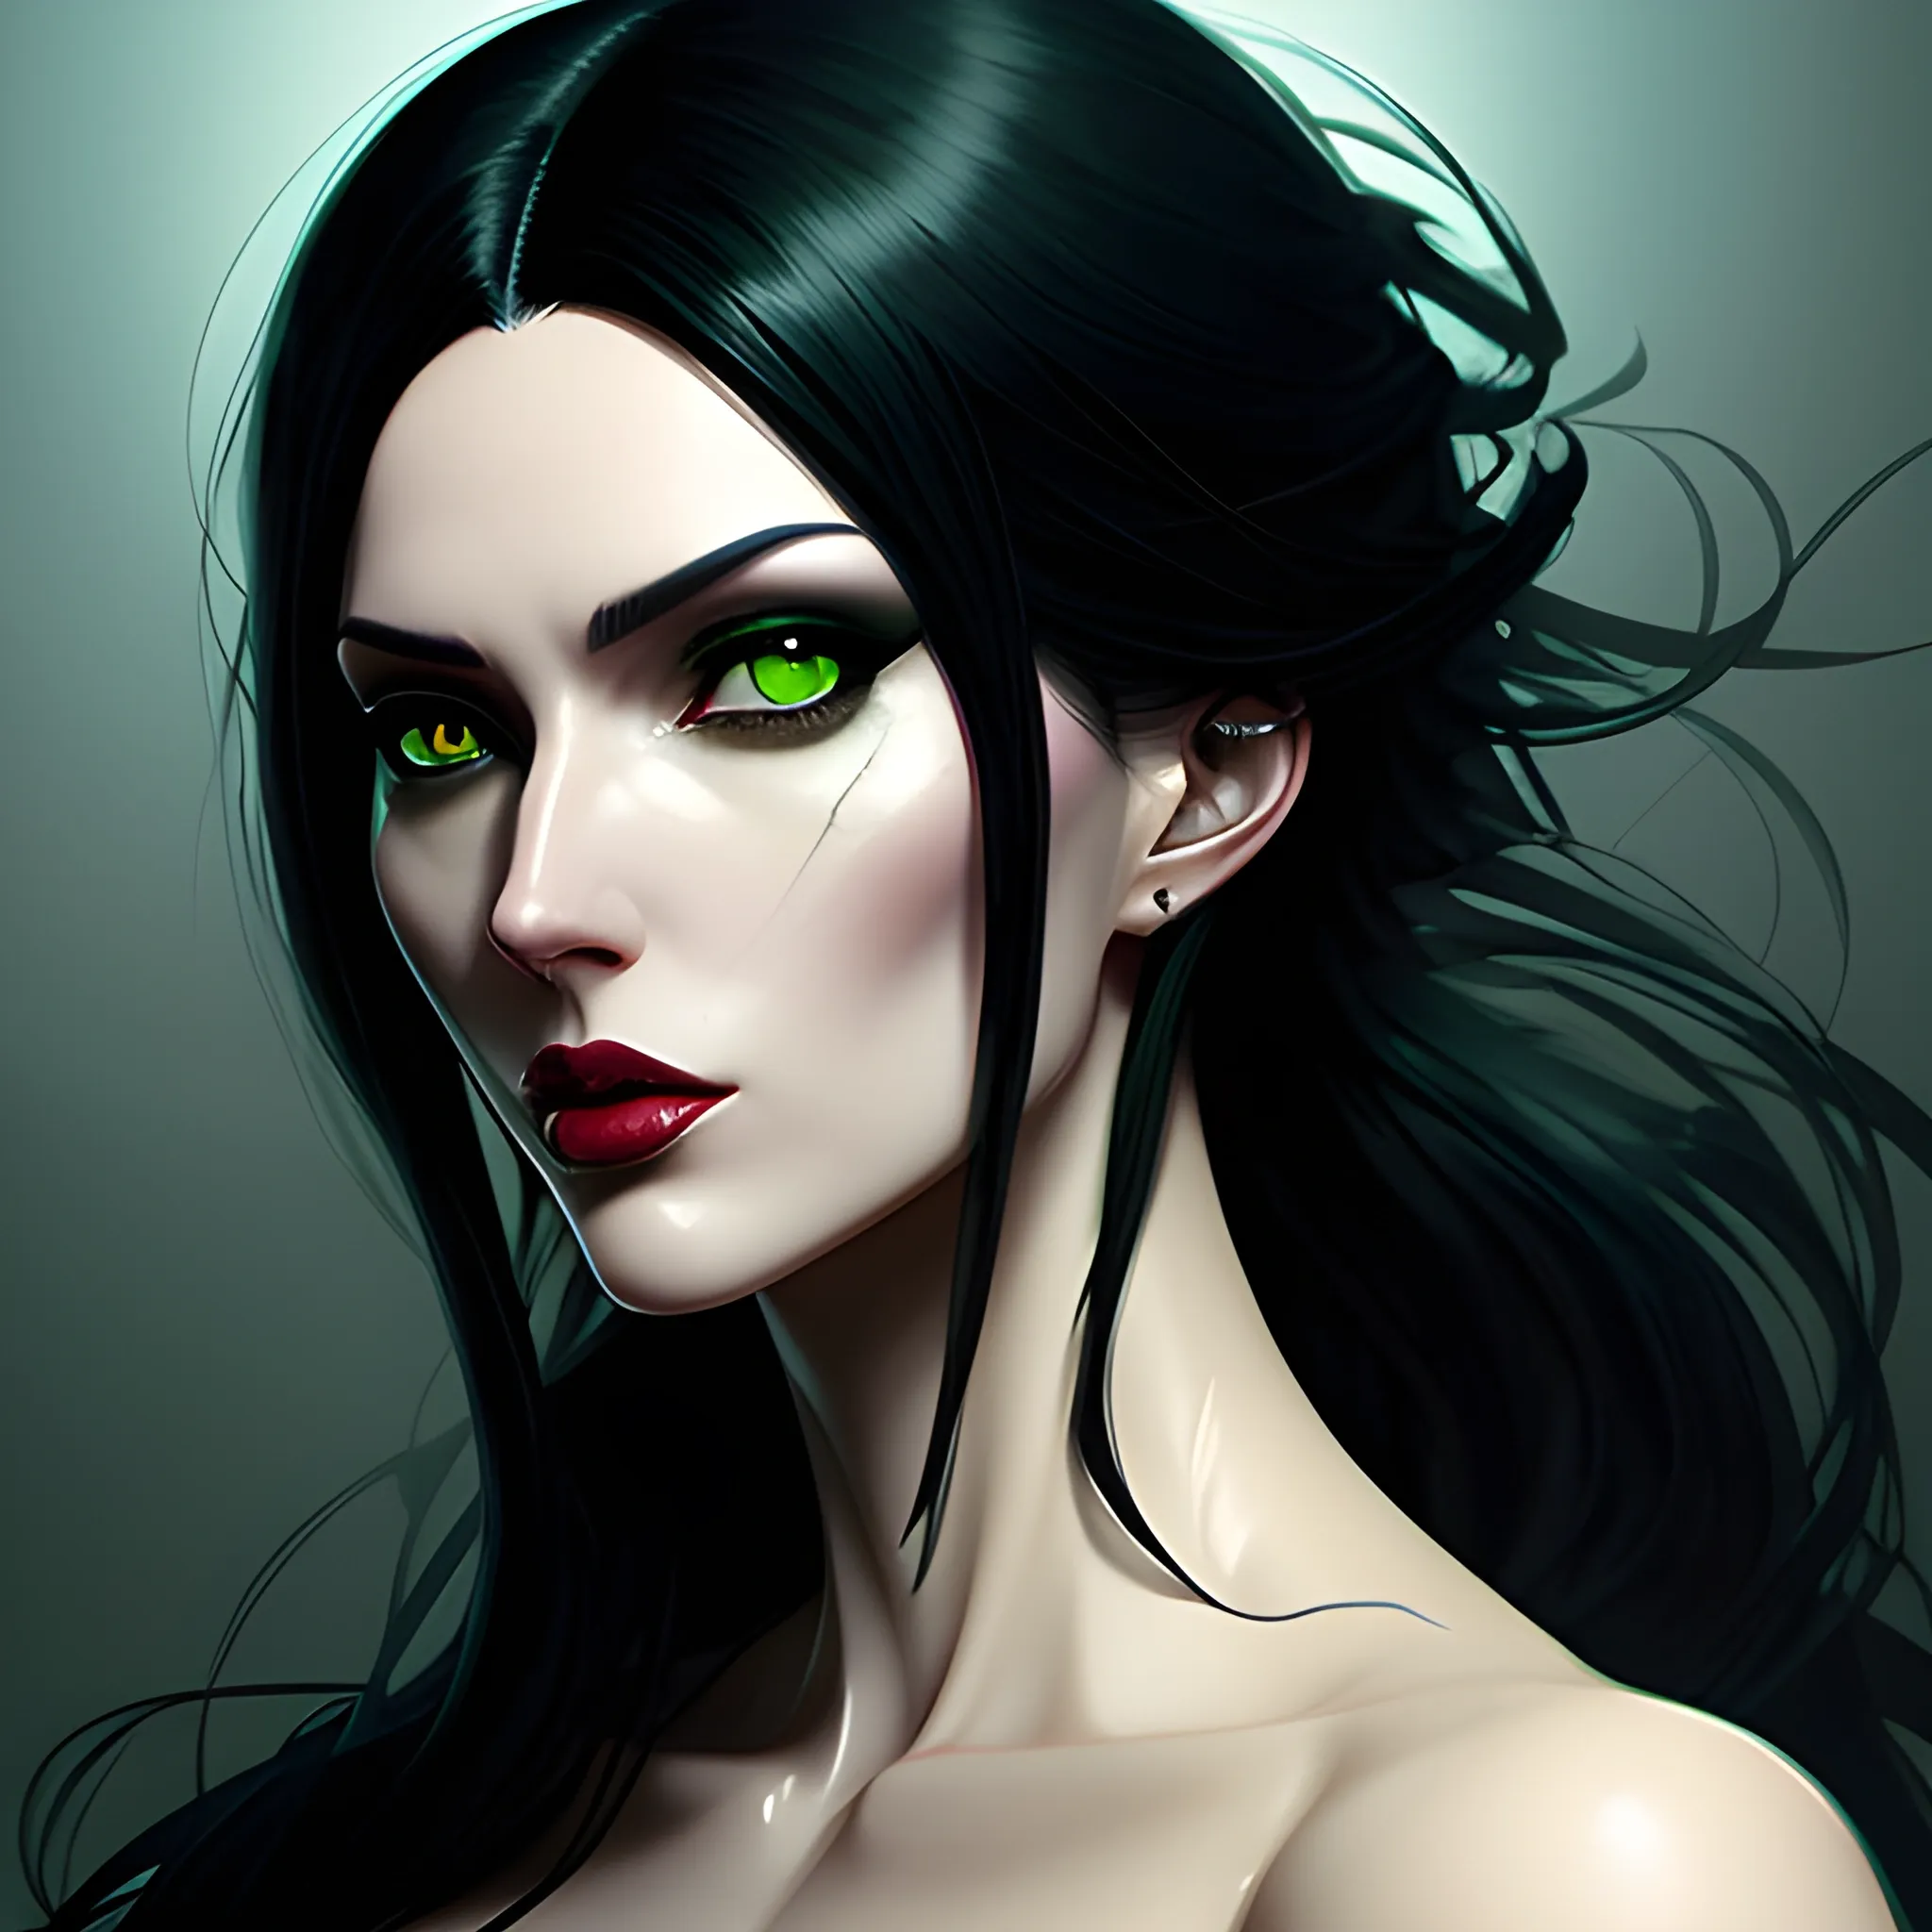 silenced girl, longhaired, lip augmentation, manga green eyes, black hair, art nuovo elements, mystery art by Grag Rutkowski